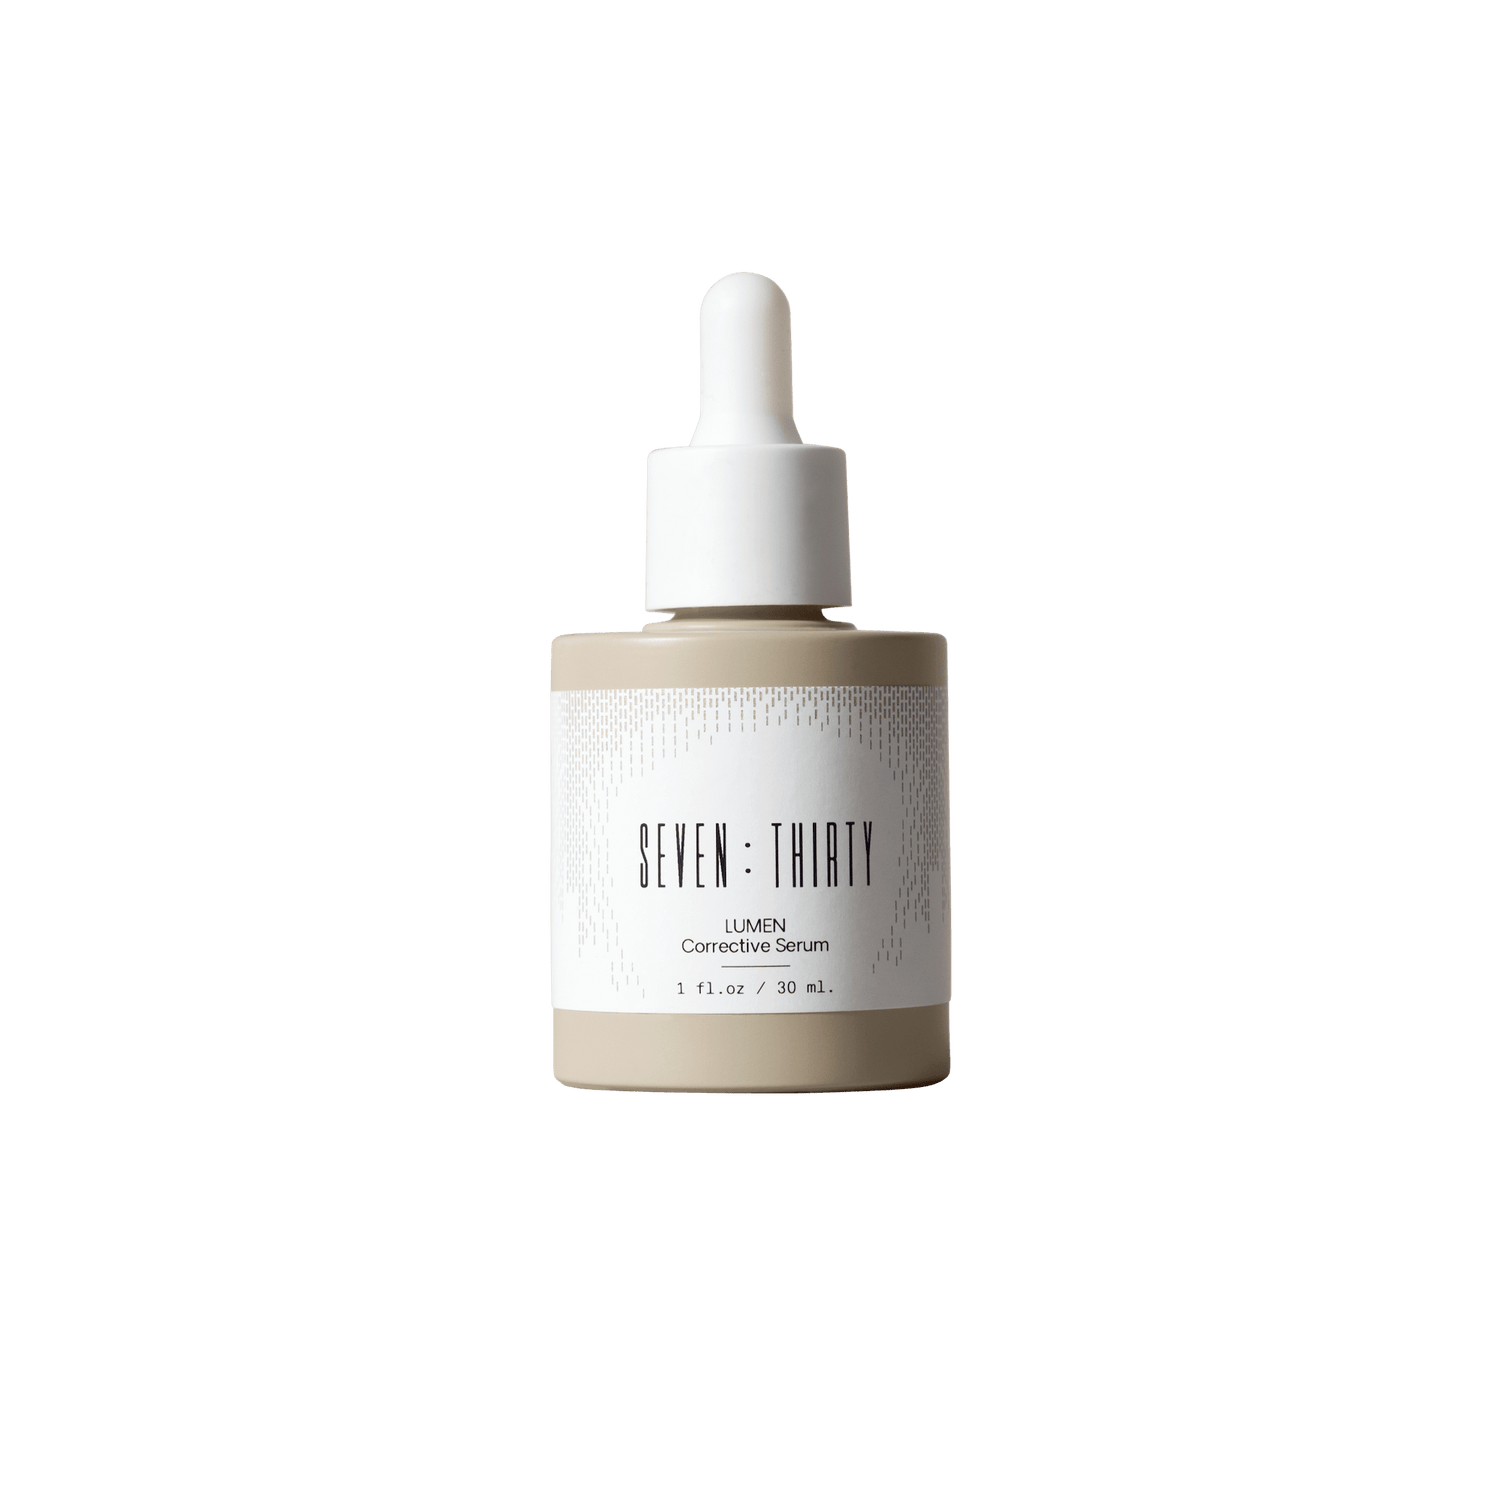 LUMEN Corrective Serum in a khaki bottle on a white background